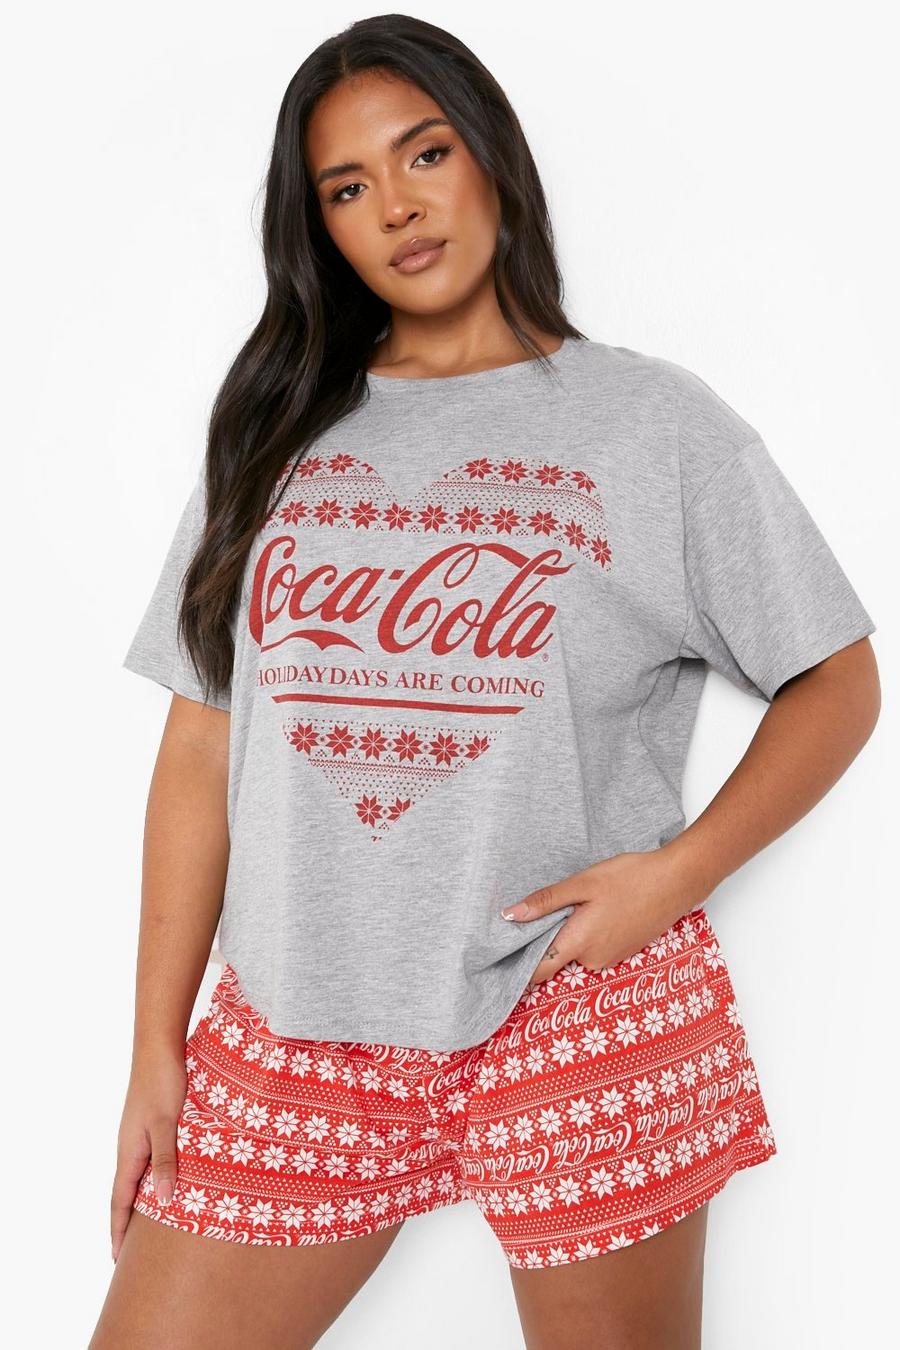 Grande taille - Ensemble de pyjama de Noël Coca Cola, Red image number 1